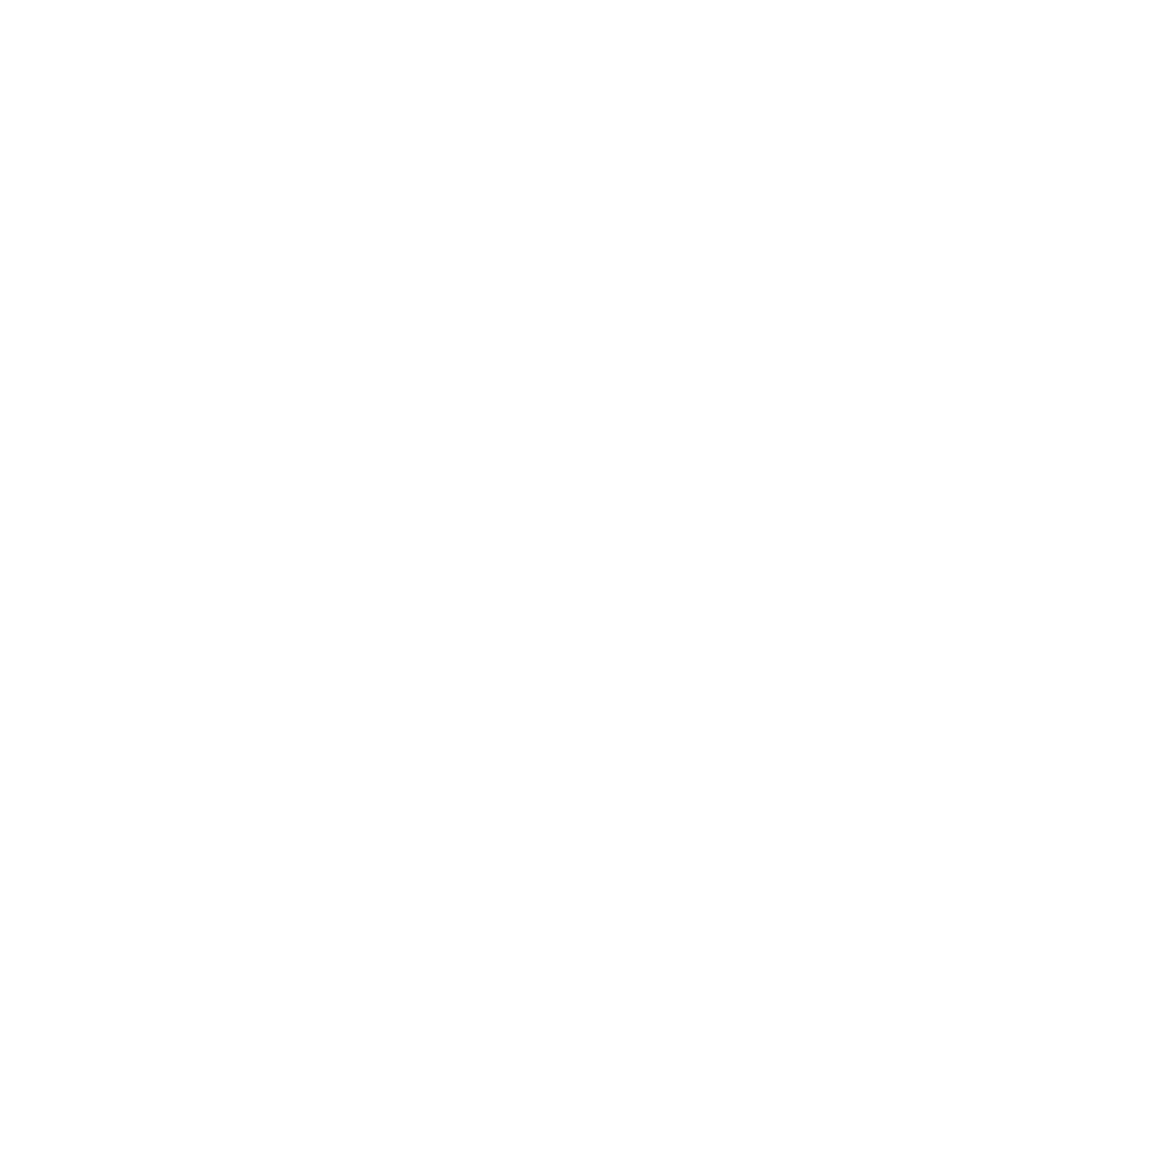 reformandrenovation circlebutton 2